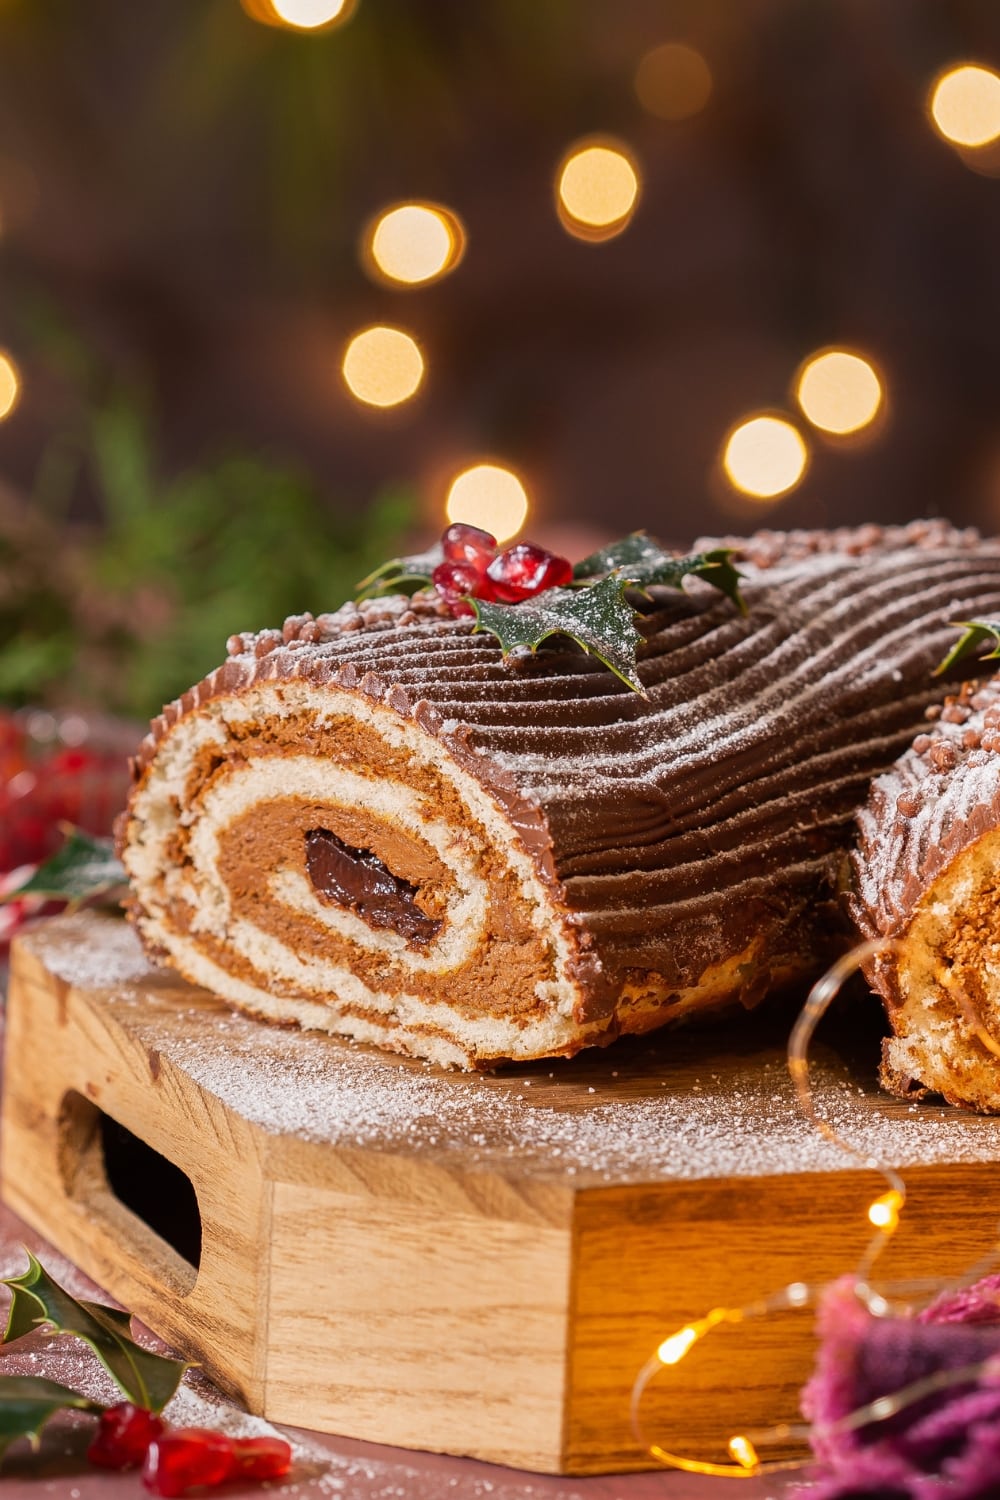 Sweet Chocolate Yule Log Cake or bûche de Noël